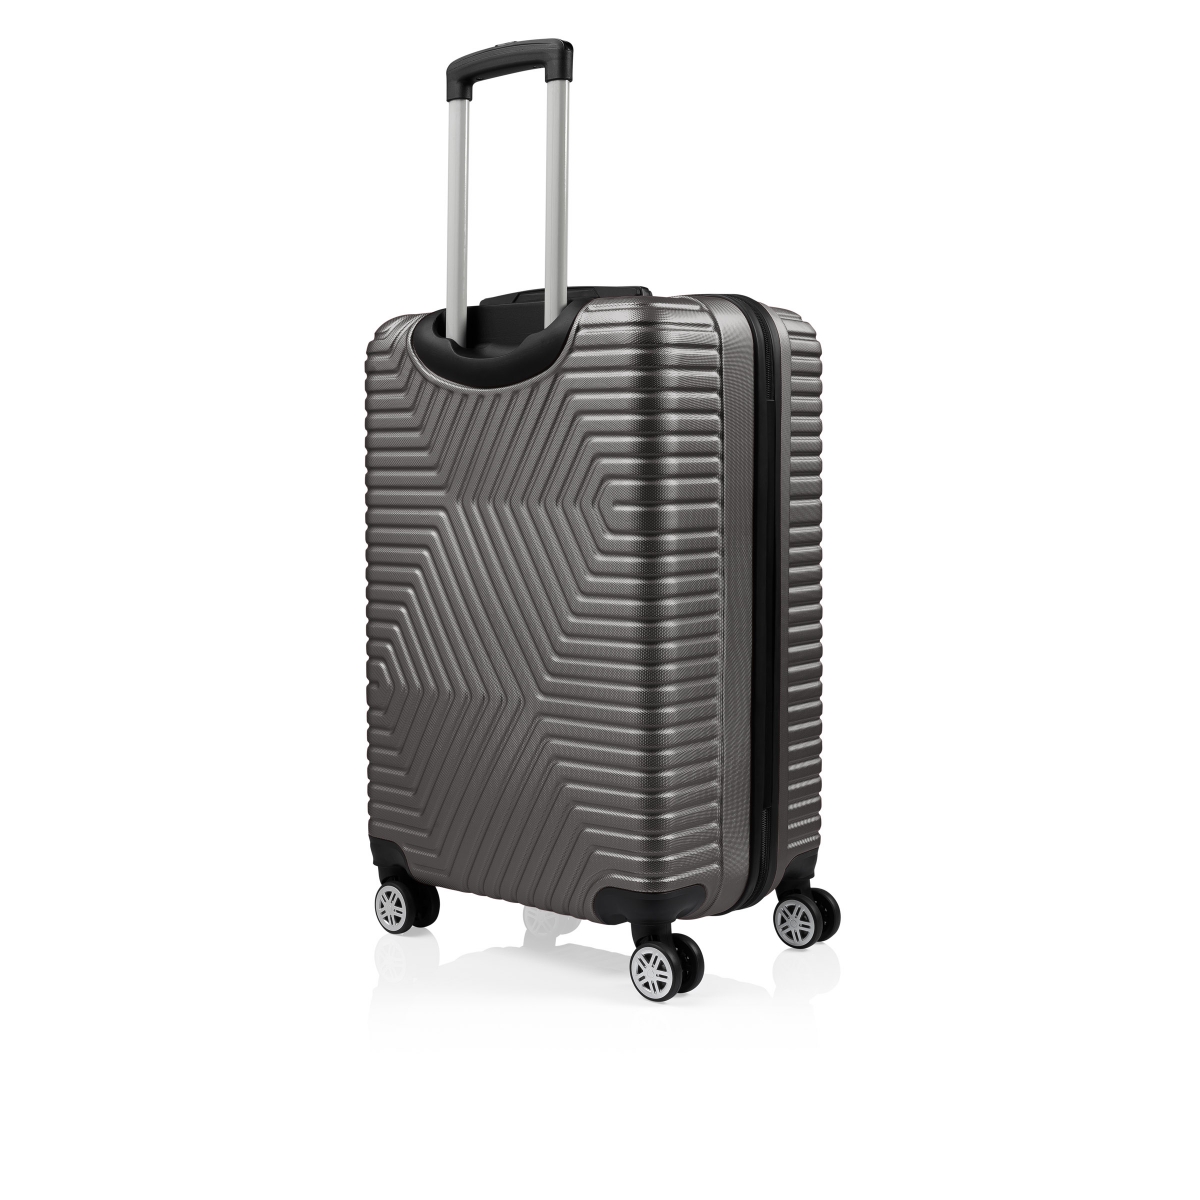 G&D Polo Suitcase ABS 3'lü Lüx Valiz Seyahat Seti - Model:600.02 Koyu Gri